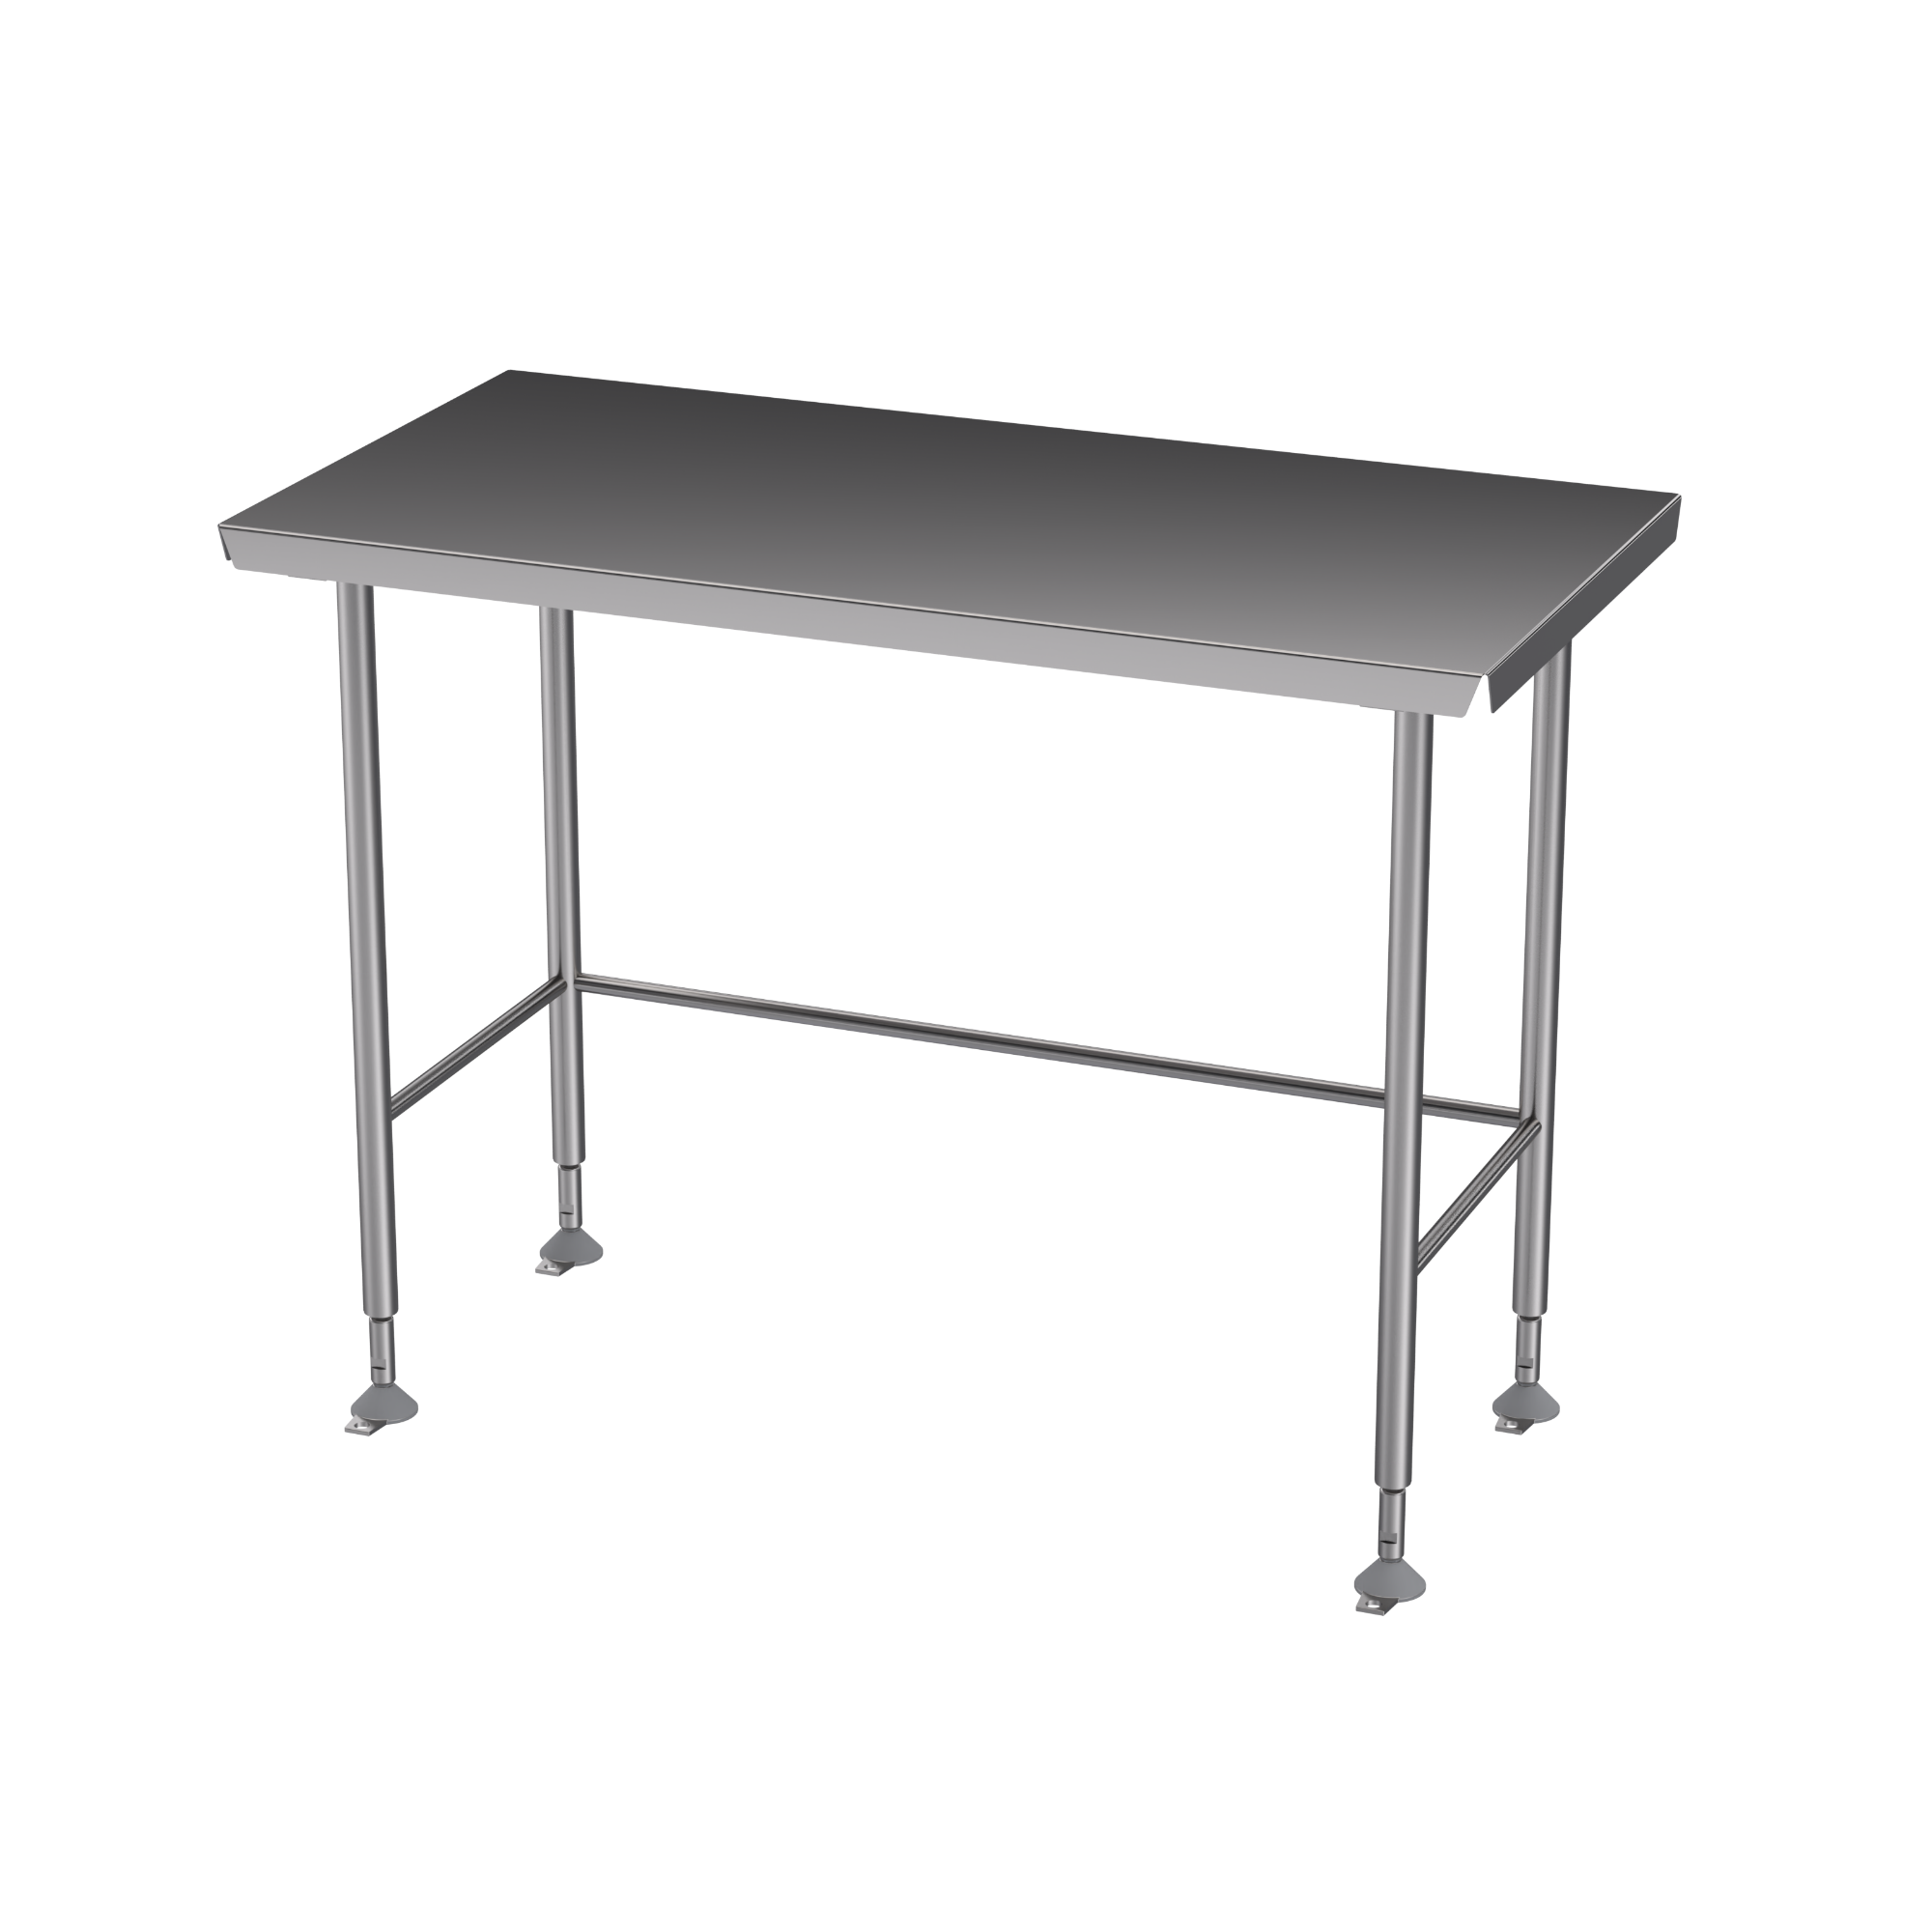 Stainless steel Hygienox table with tubular rear tie bar